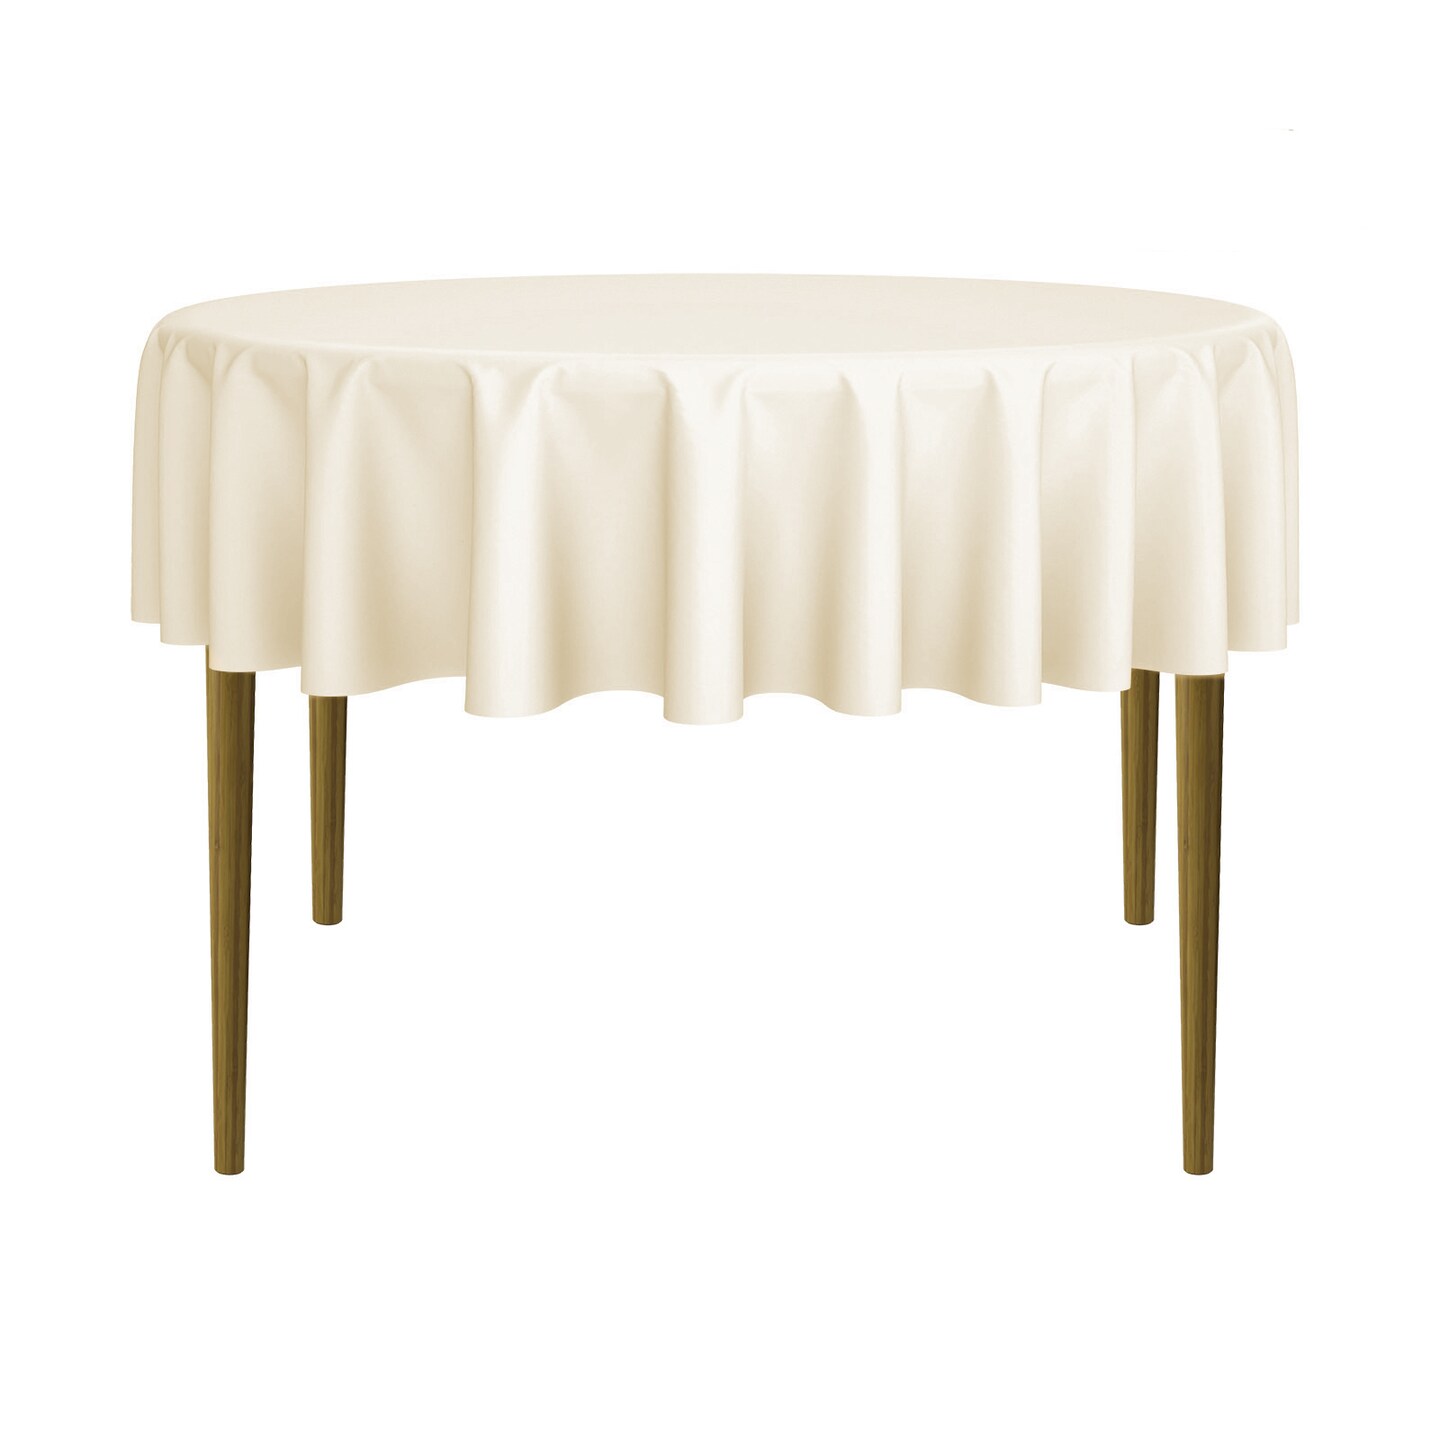 Lann's Linens - 20 Premium Round Tablecloths for Wedding / Banquet / Restaurant - Polyester Fabric Table Cloths